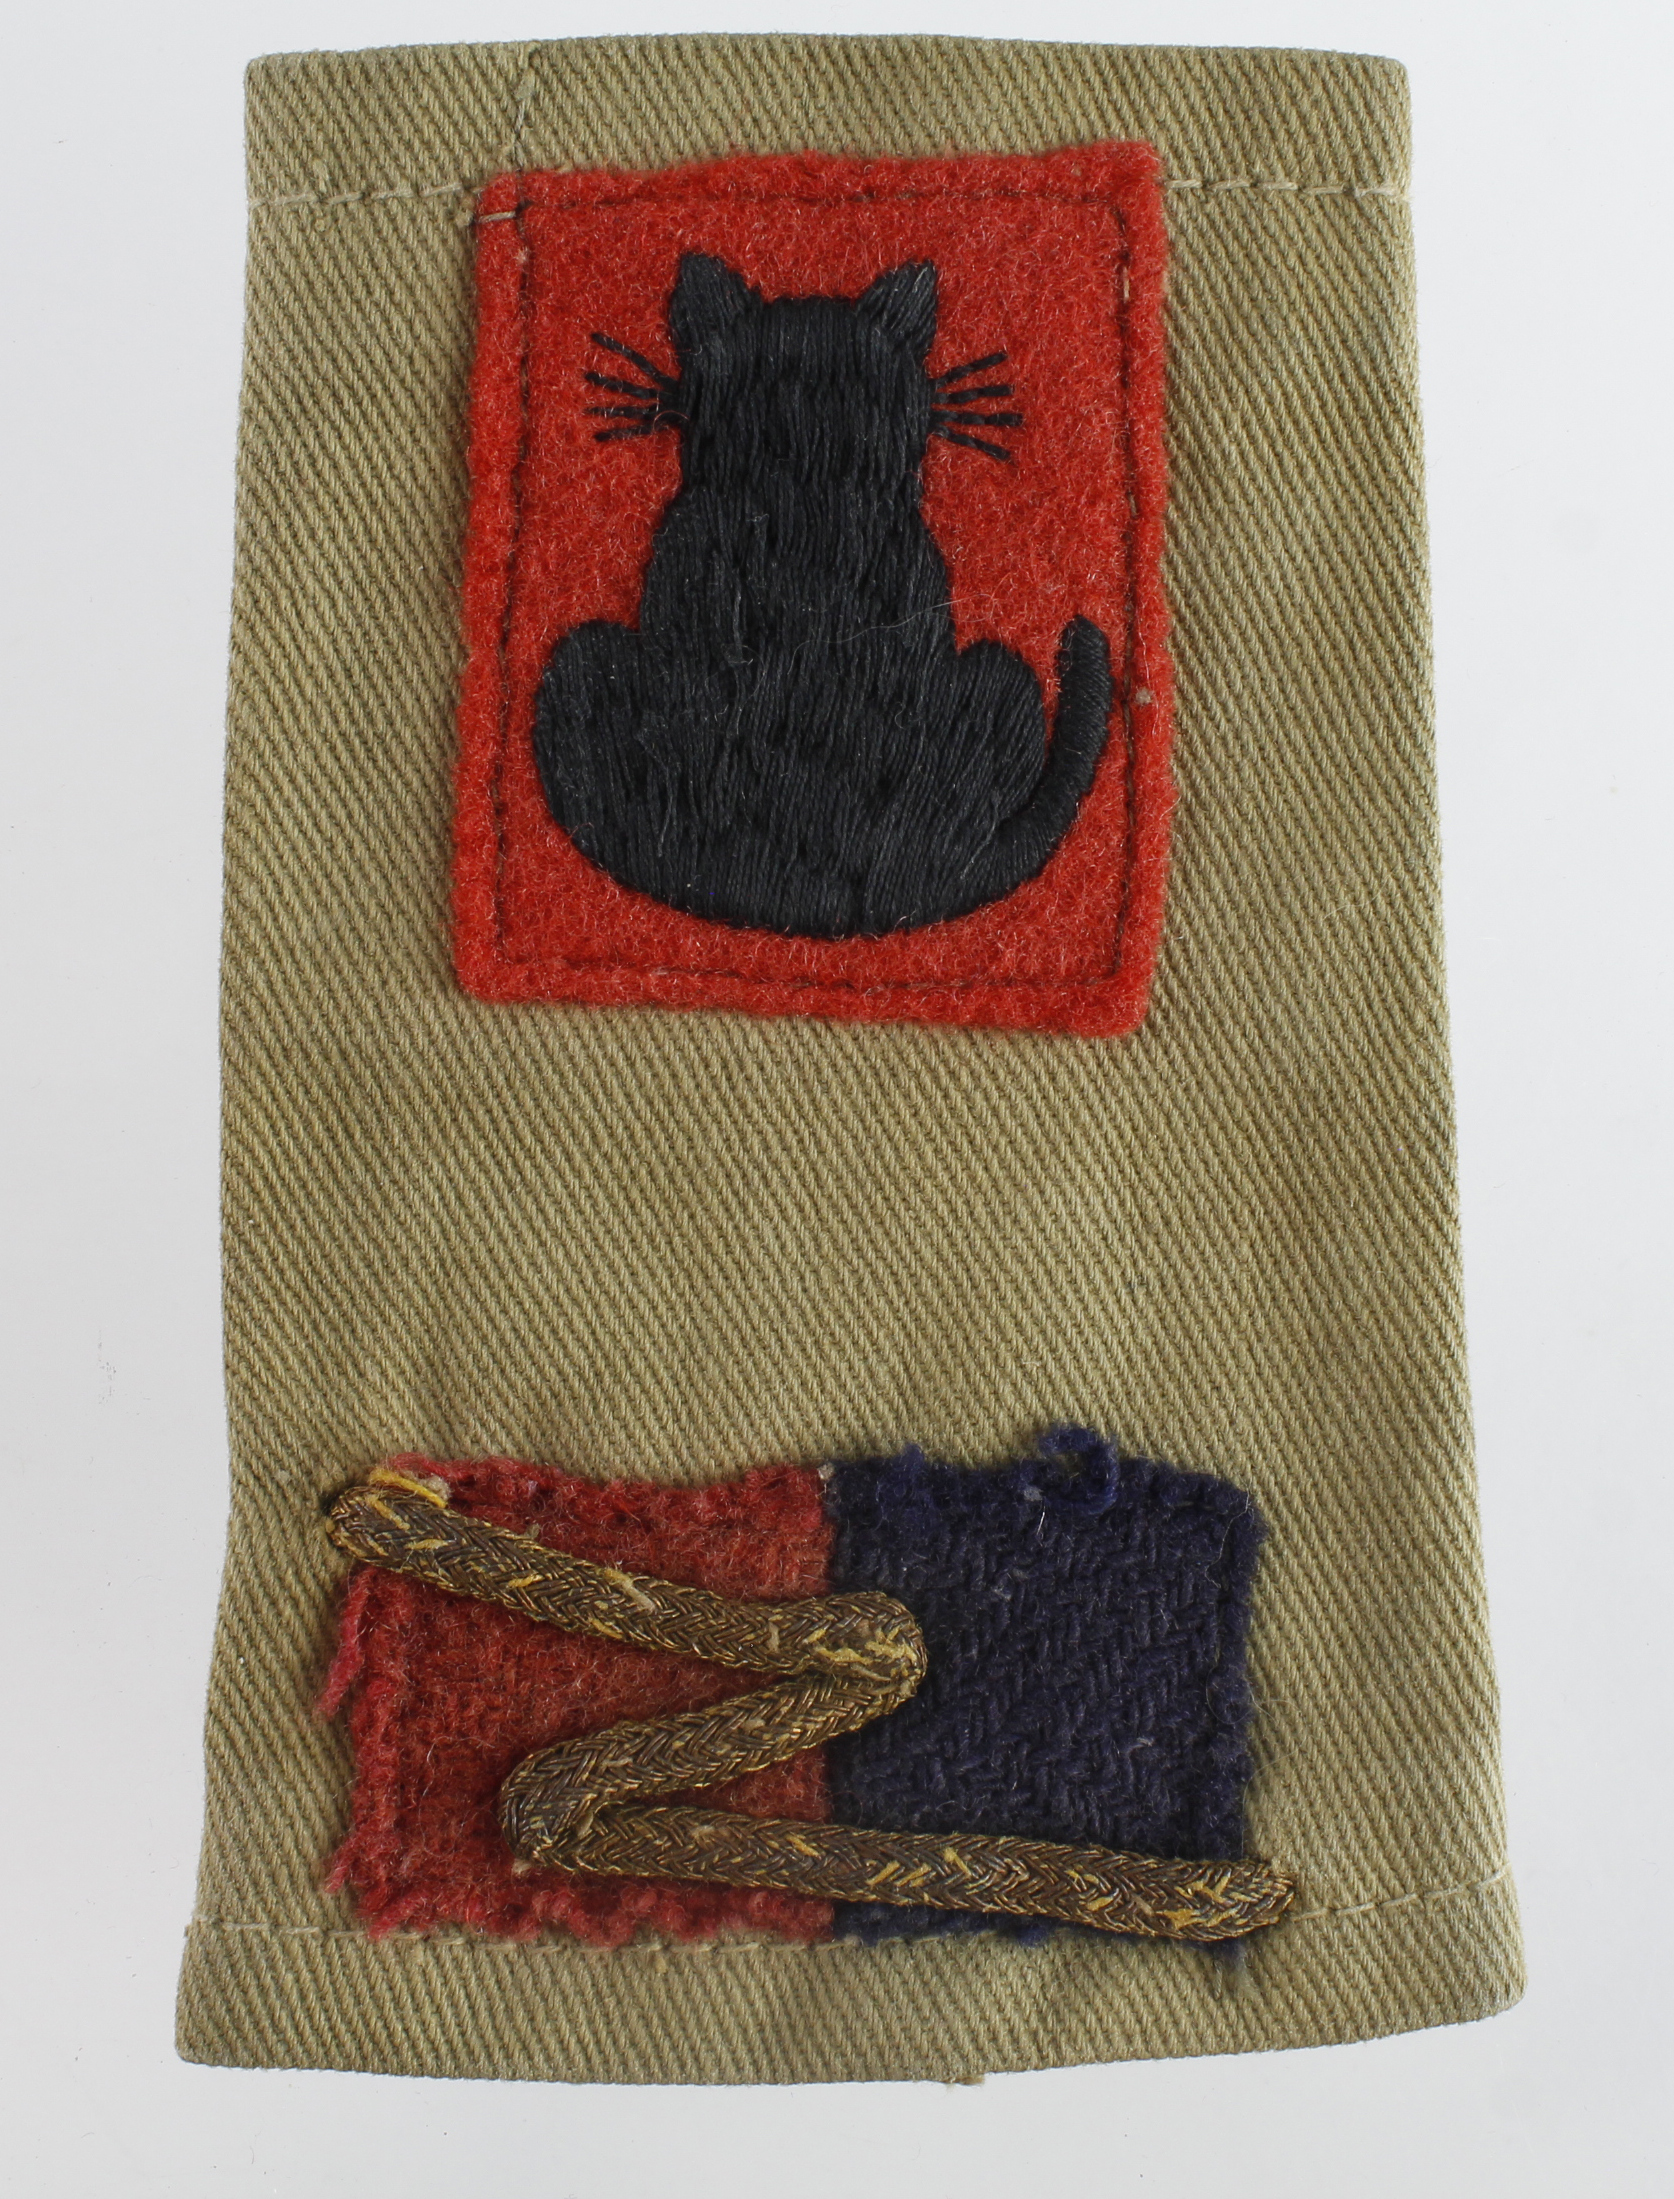 Badge WW2 battle dress blouse cloth shoulder div patch see picture.